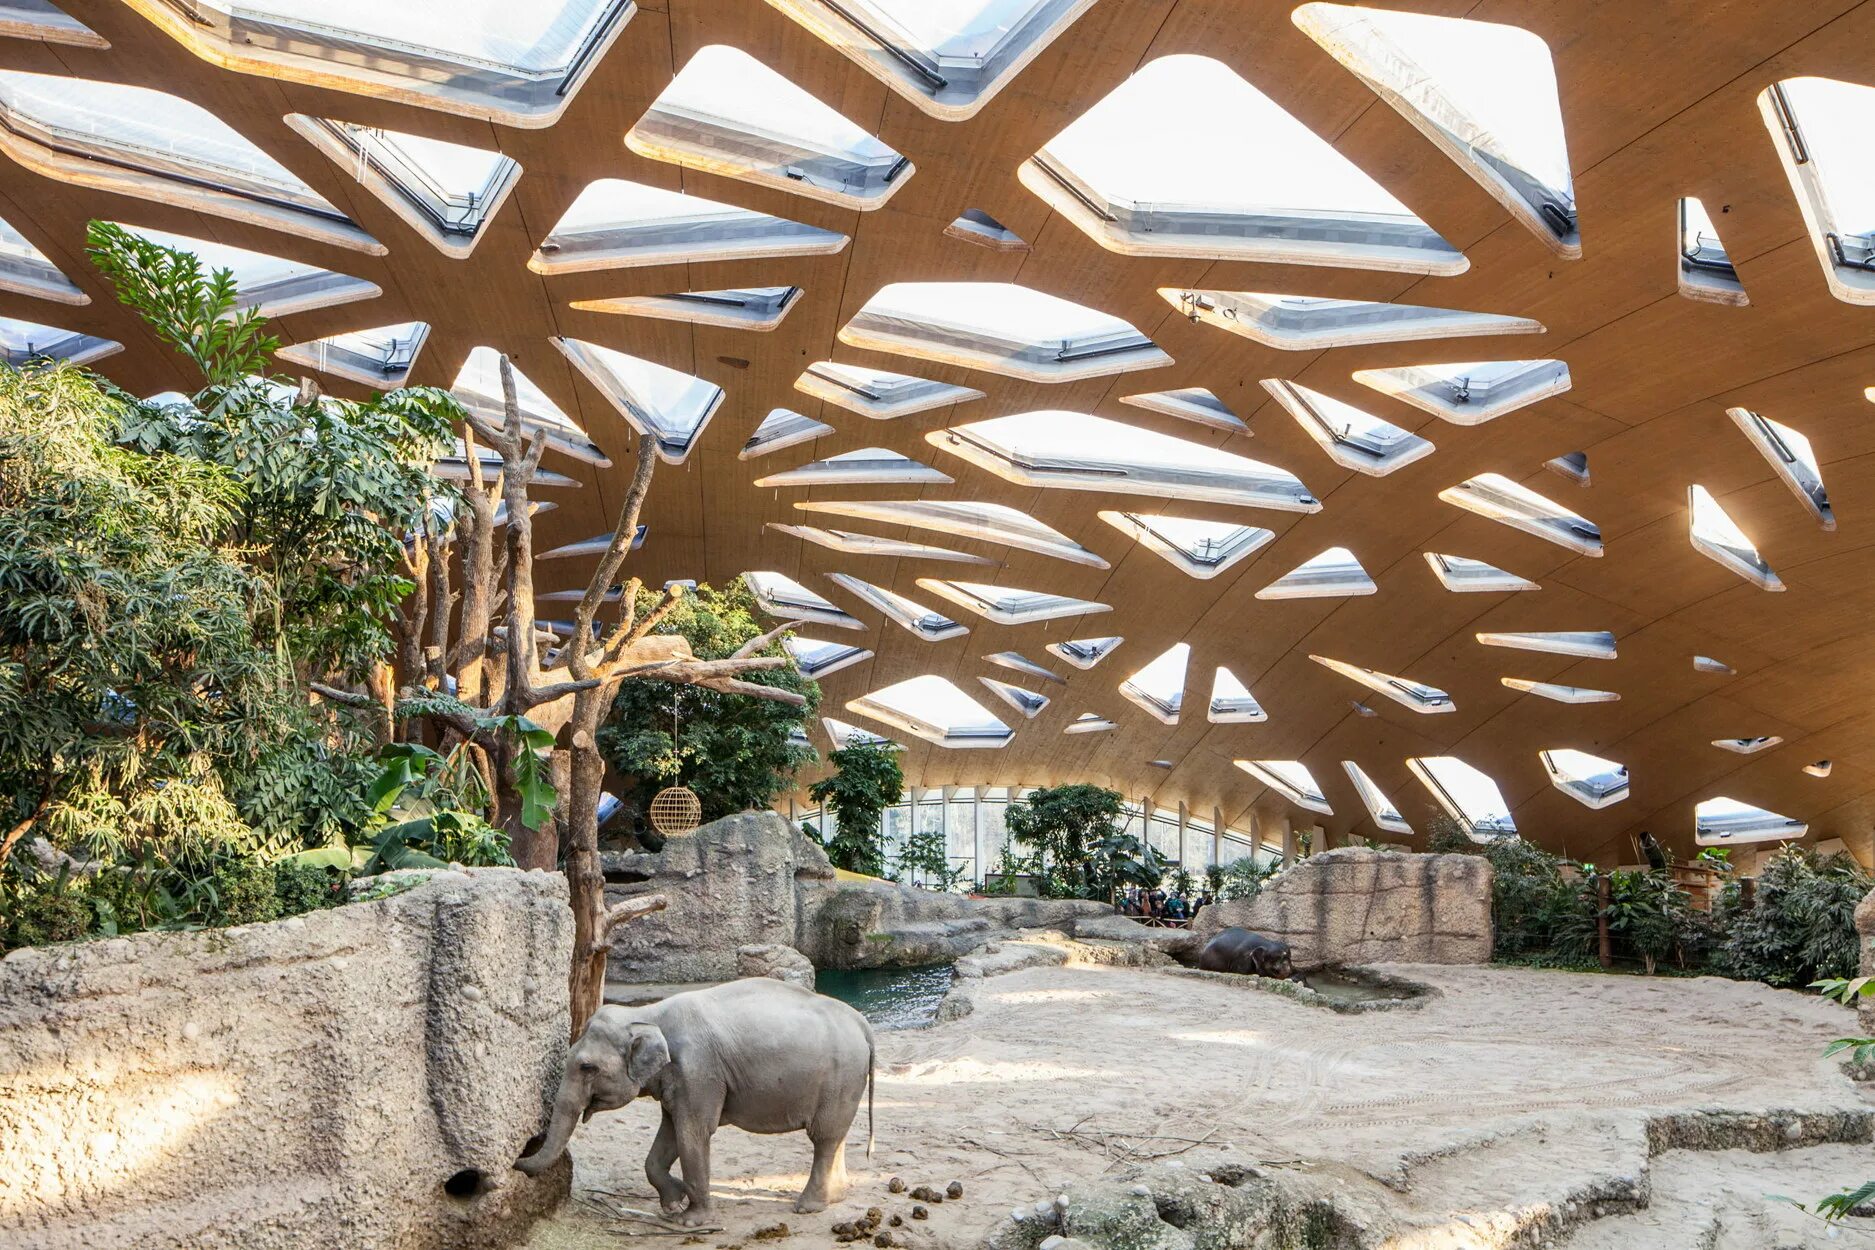 Elephant house. Зоопарк Сингапур архитектура. Современный зоопарк. Зоопарк здание. Проекты зоопарков архитектура.